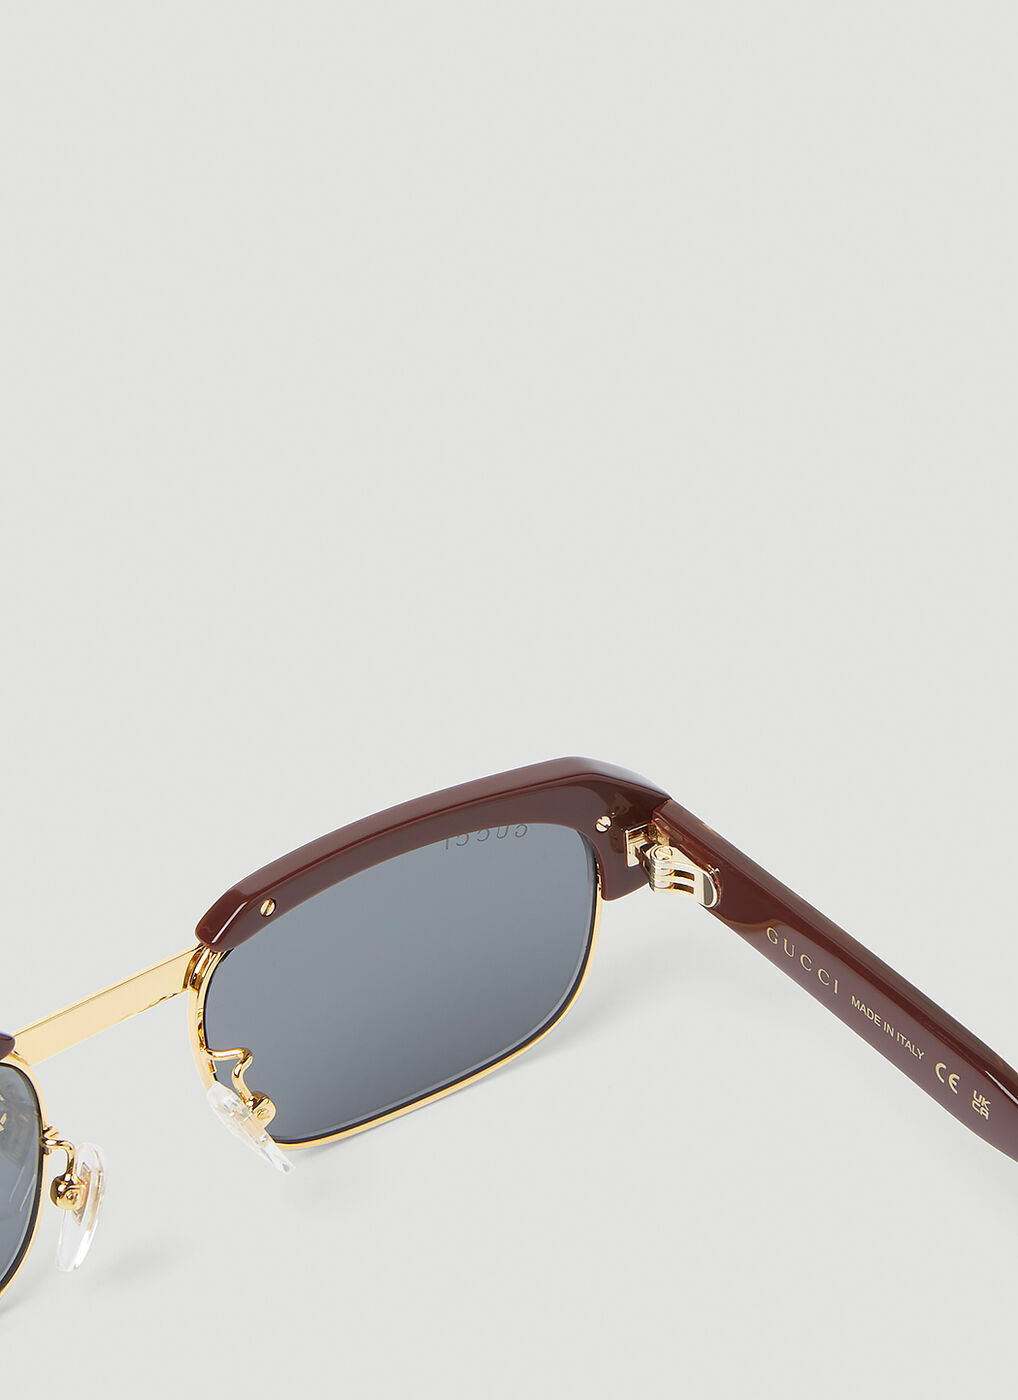 Gucci - Rectangular Sunglasses in Brown Gucci